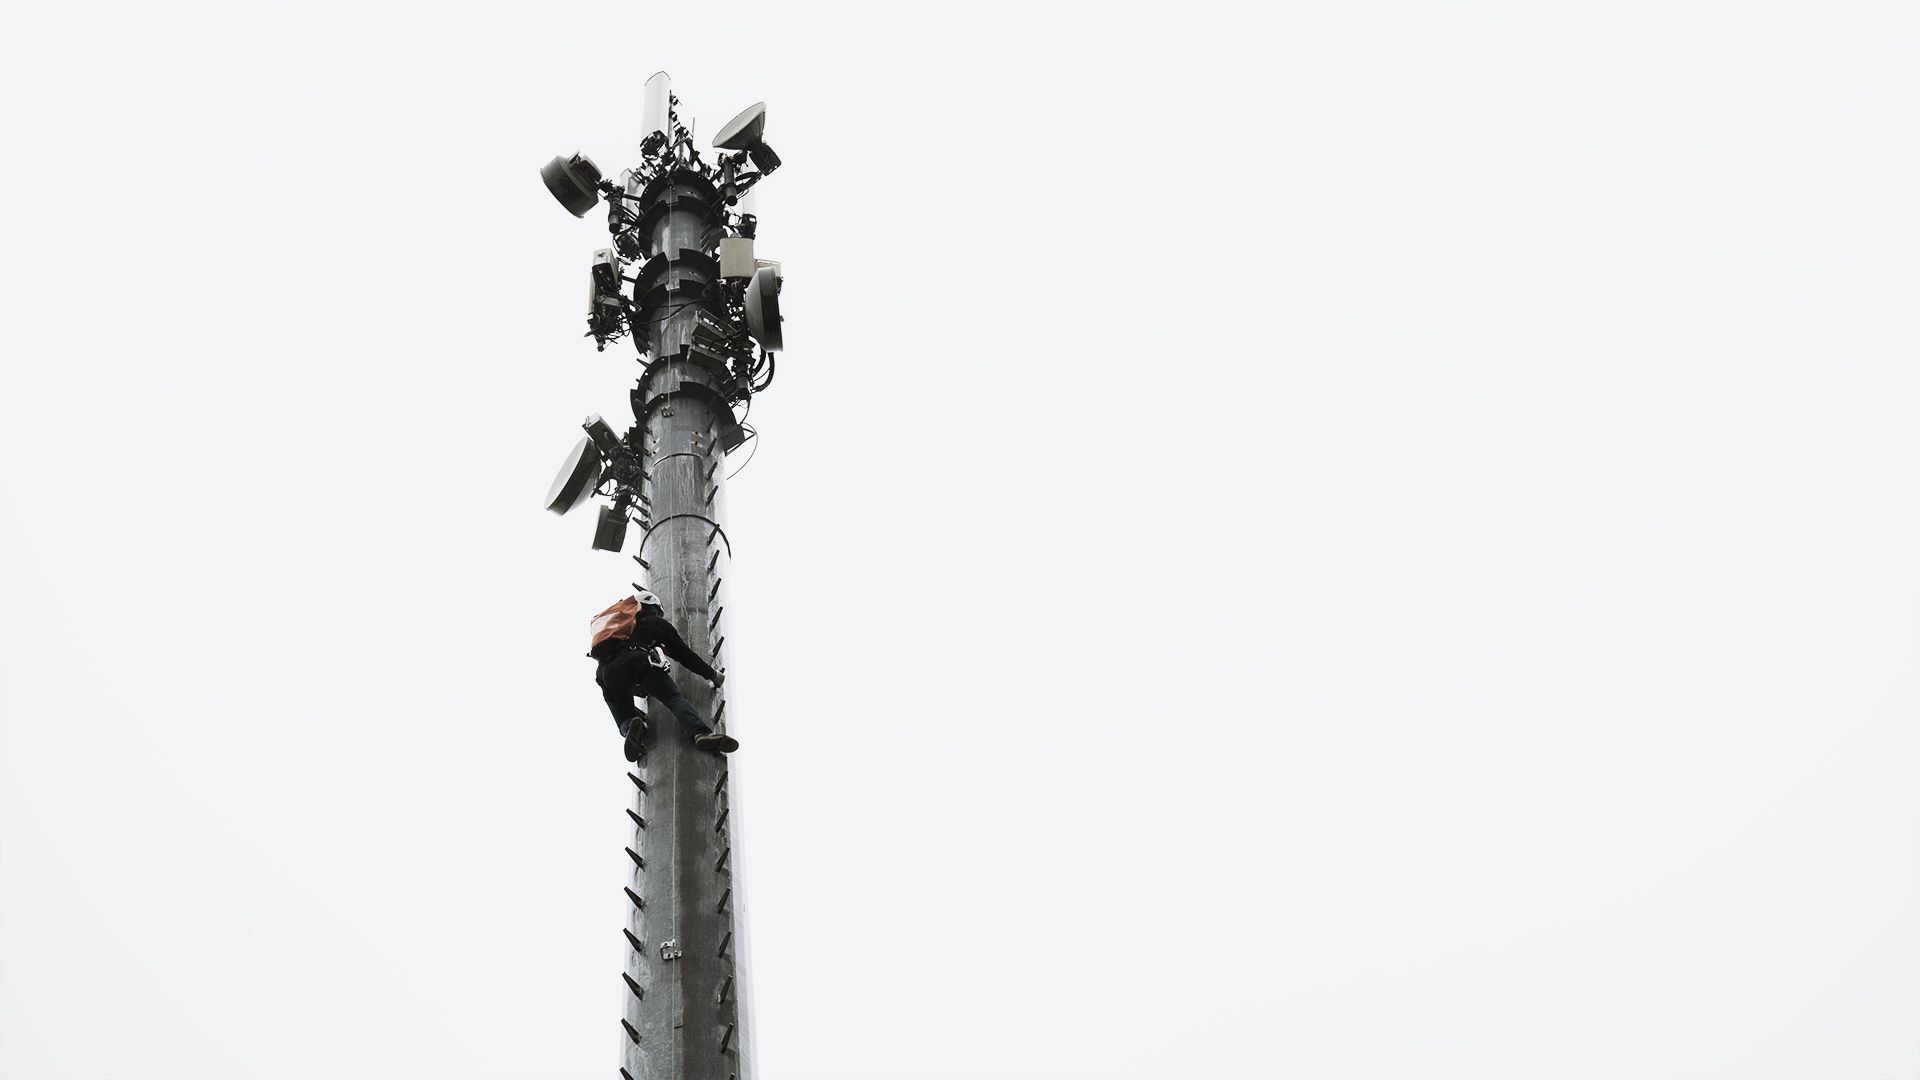 Vertical lifeline for access on telecom mast